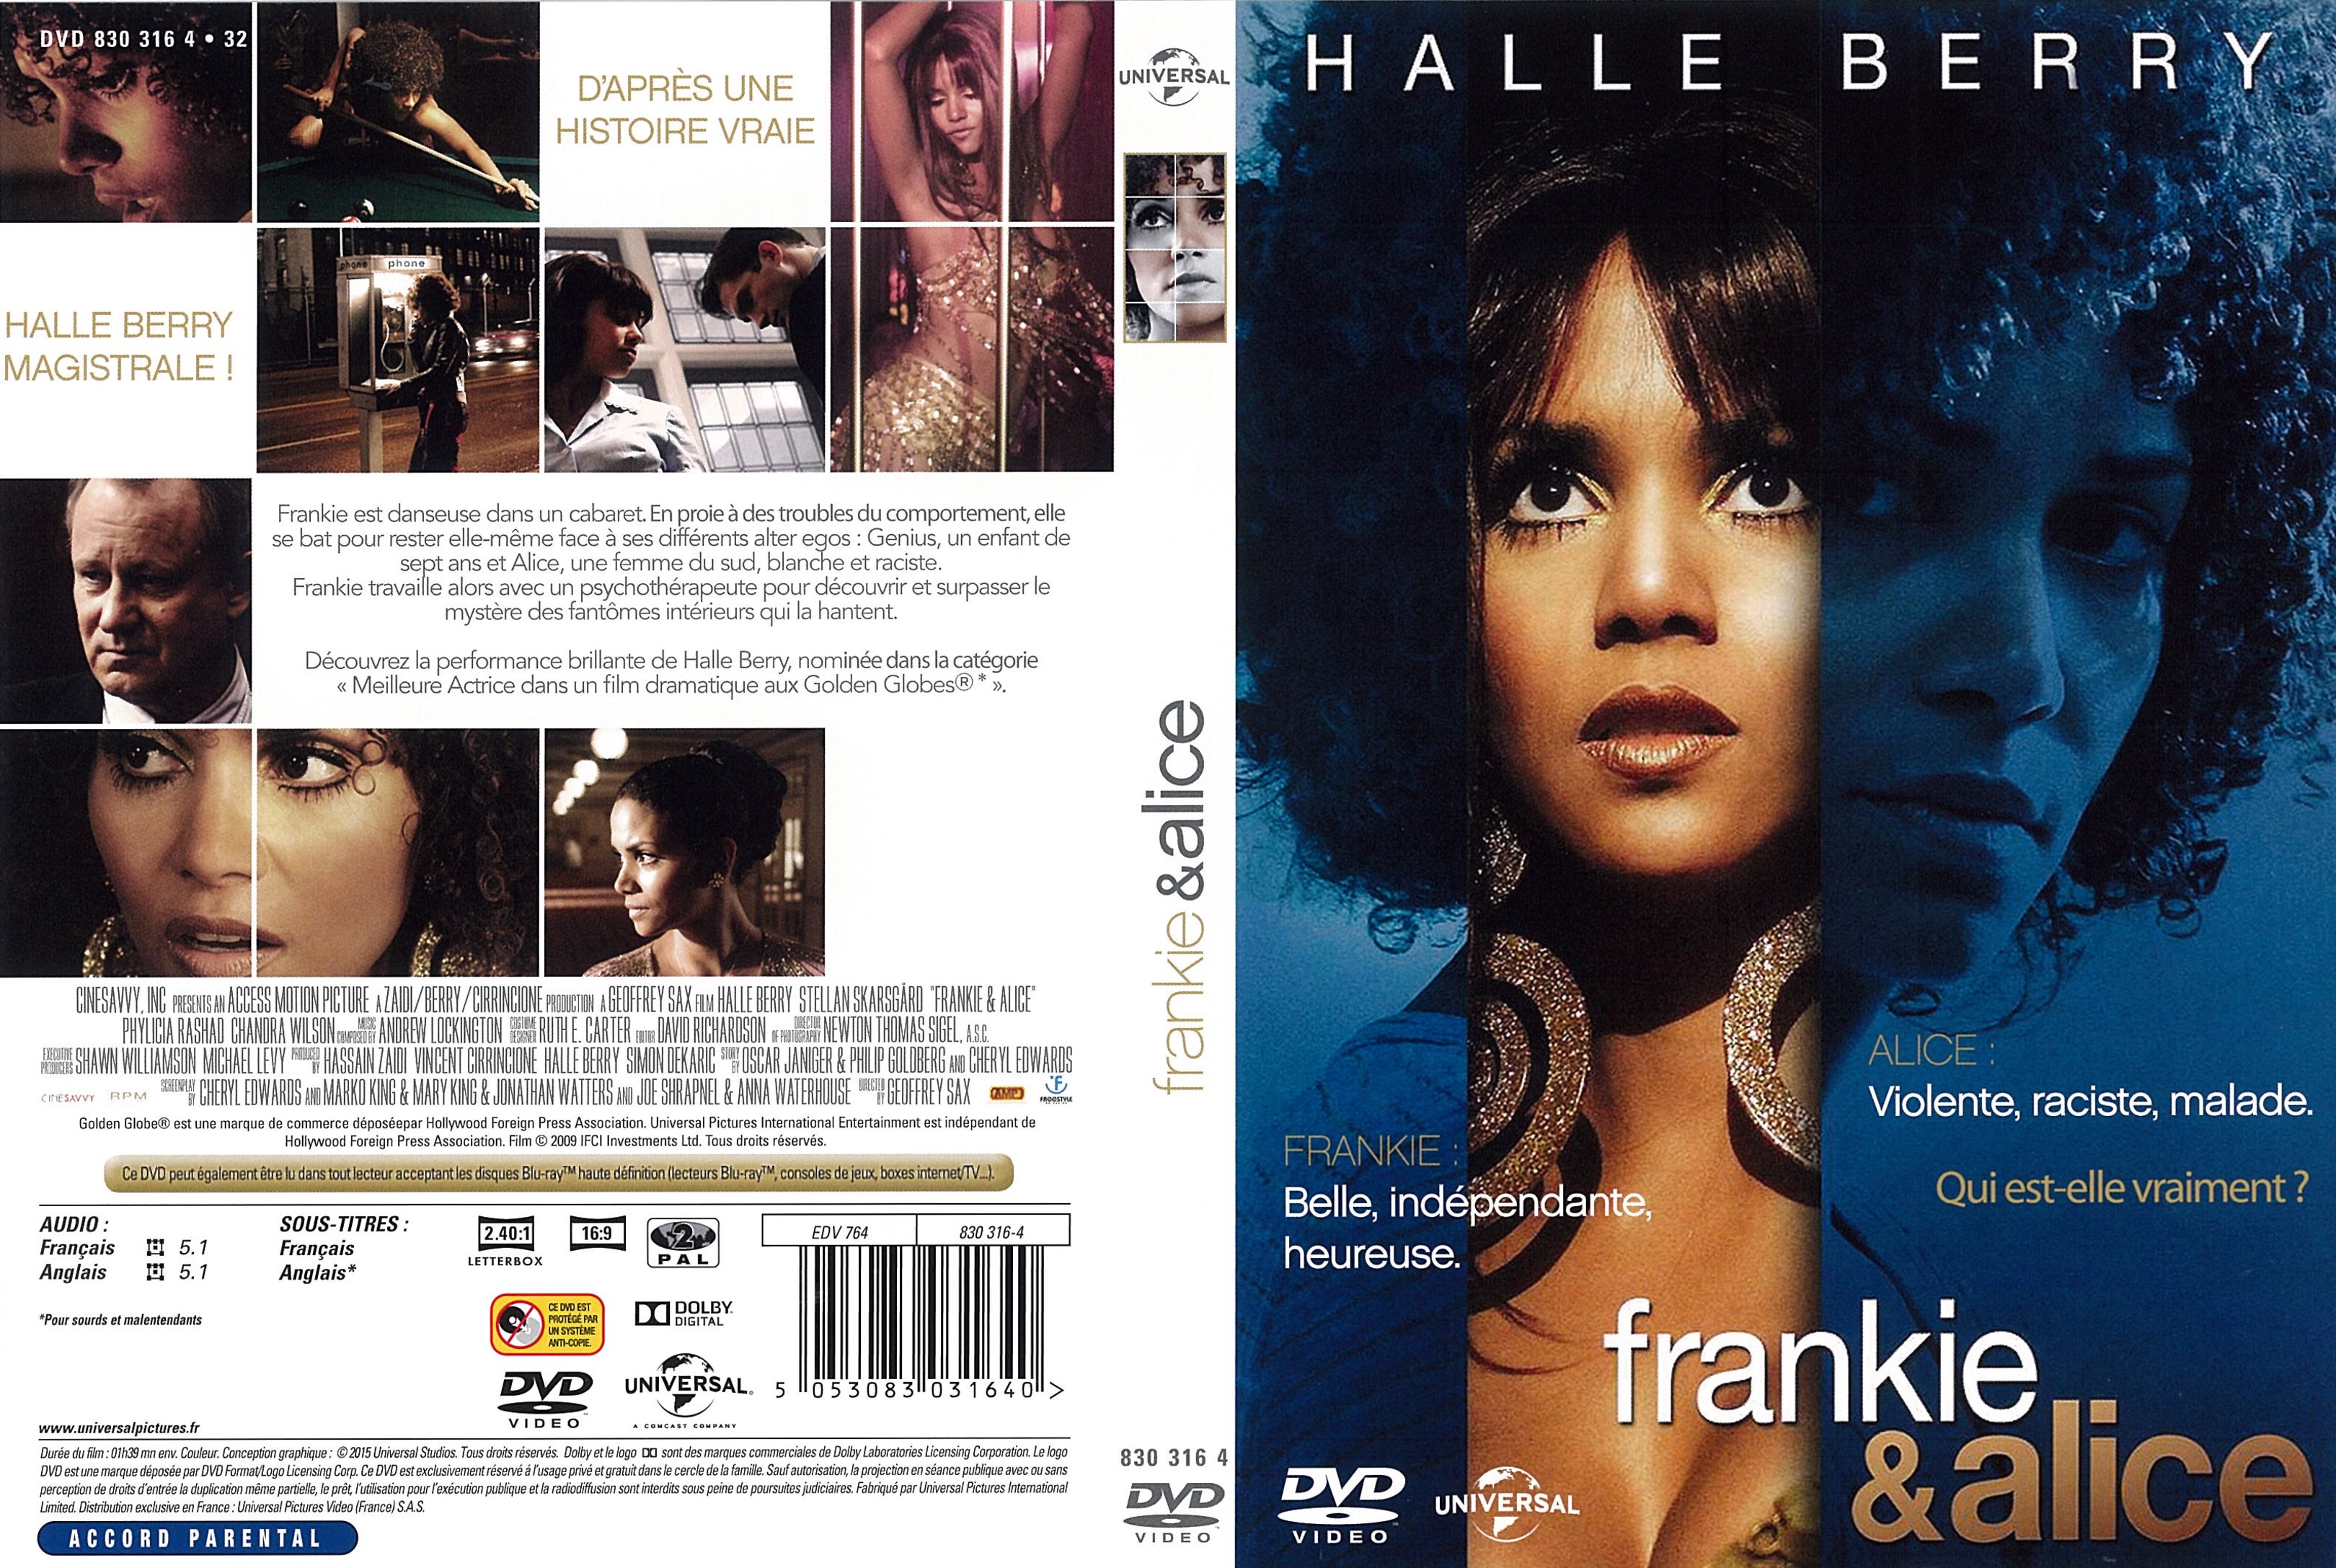 Jaquette DVD Frankie & Alice